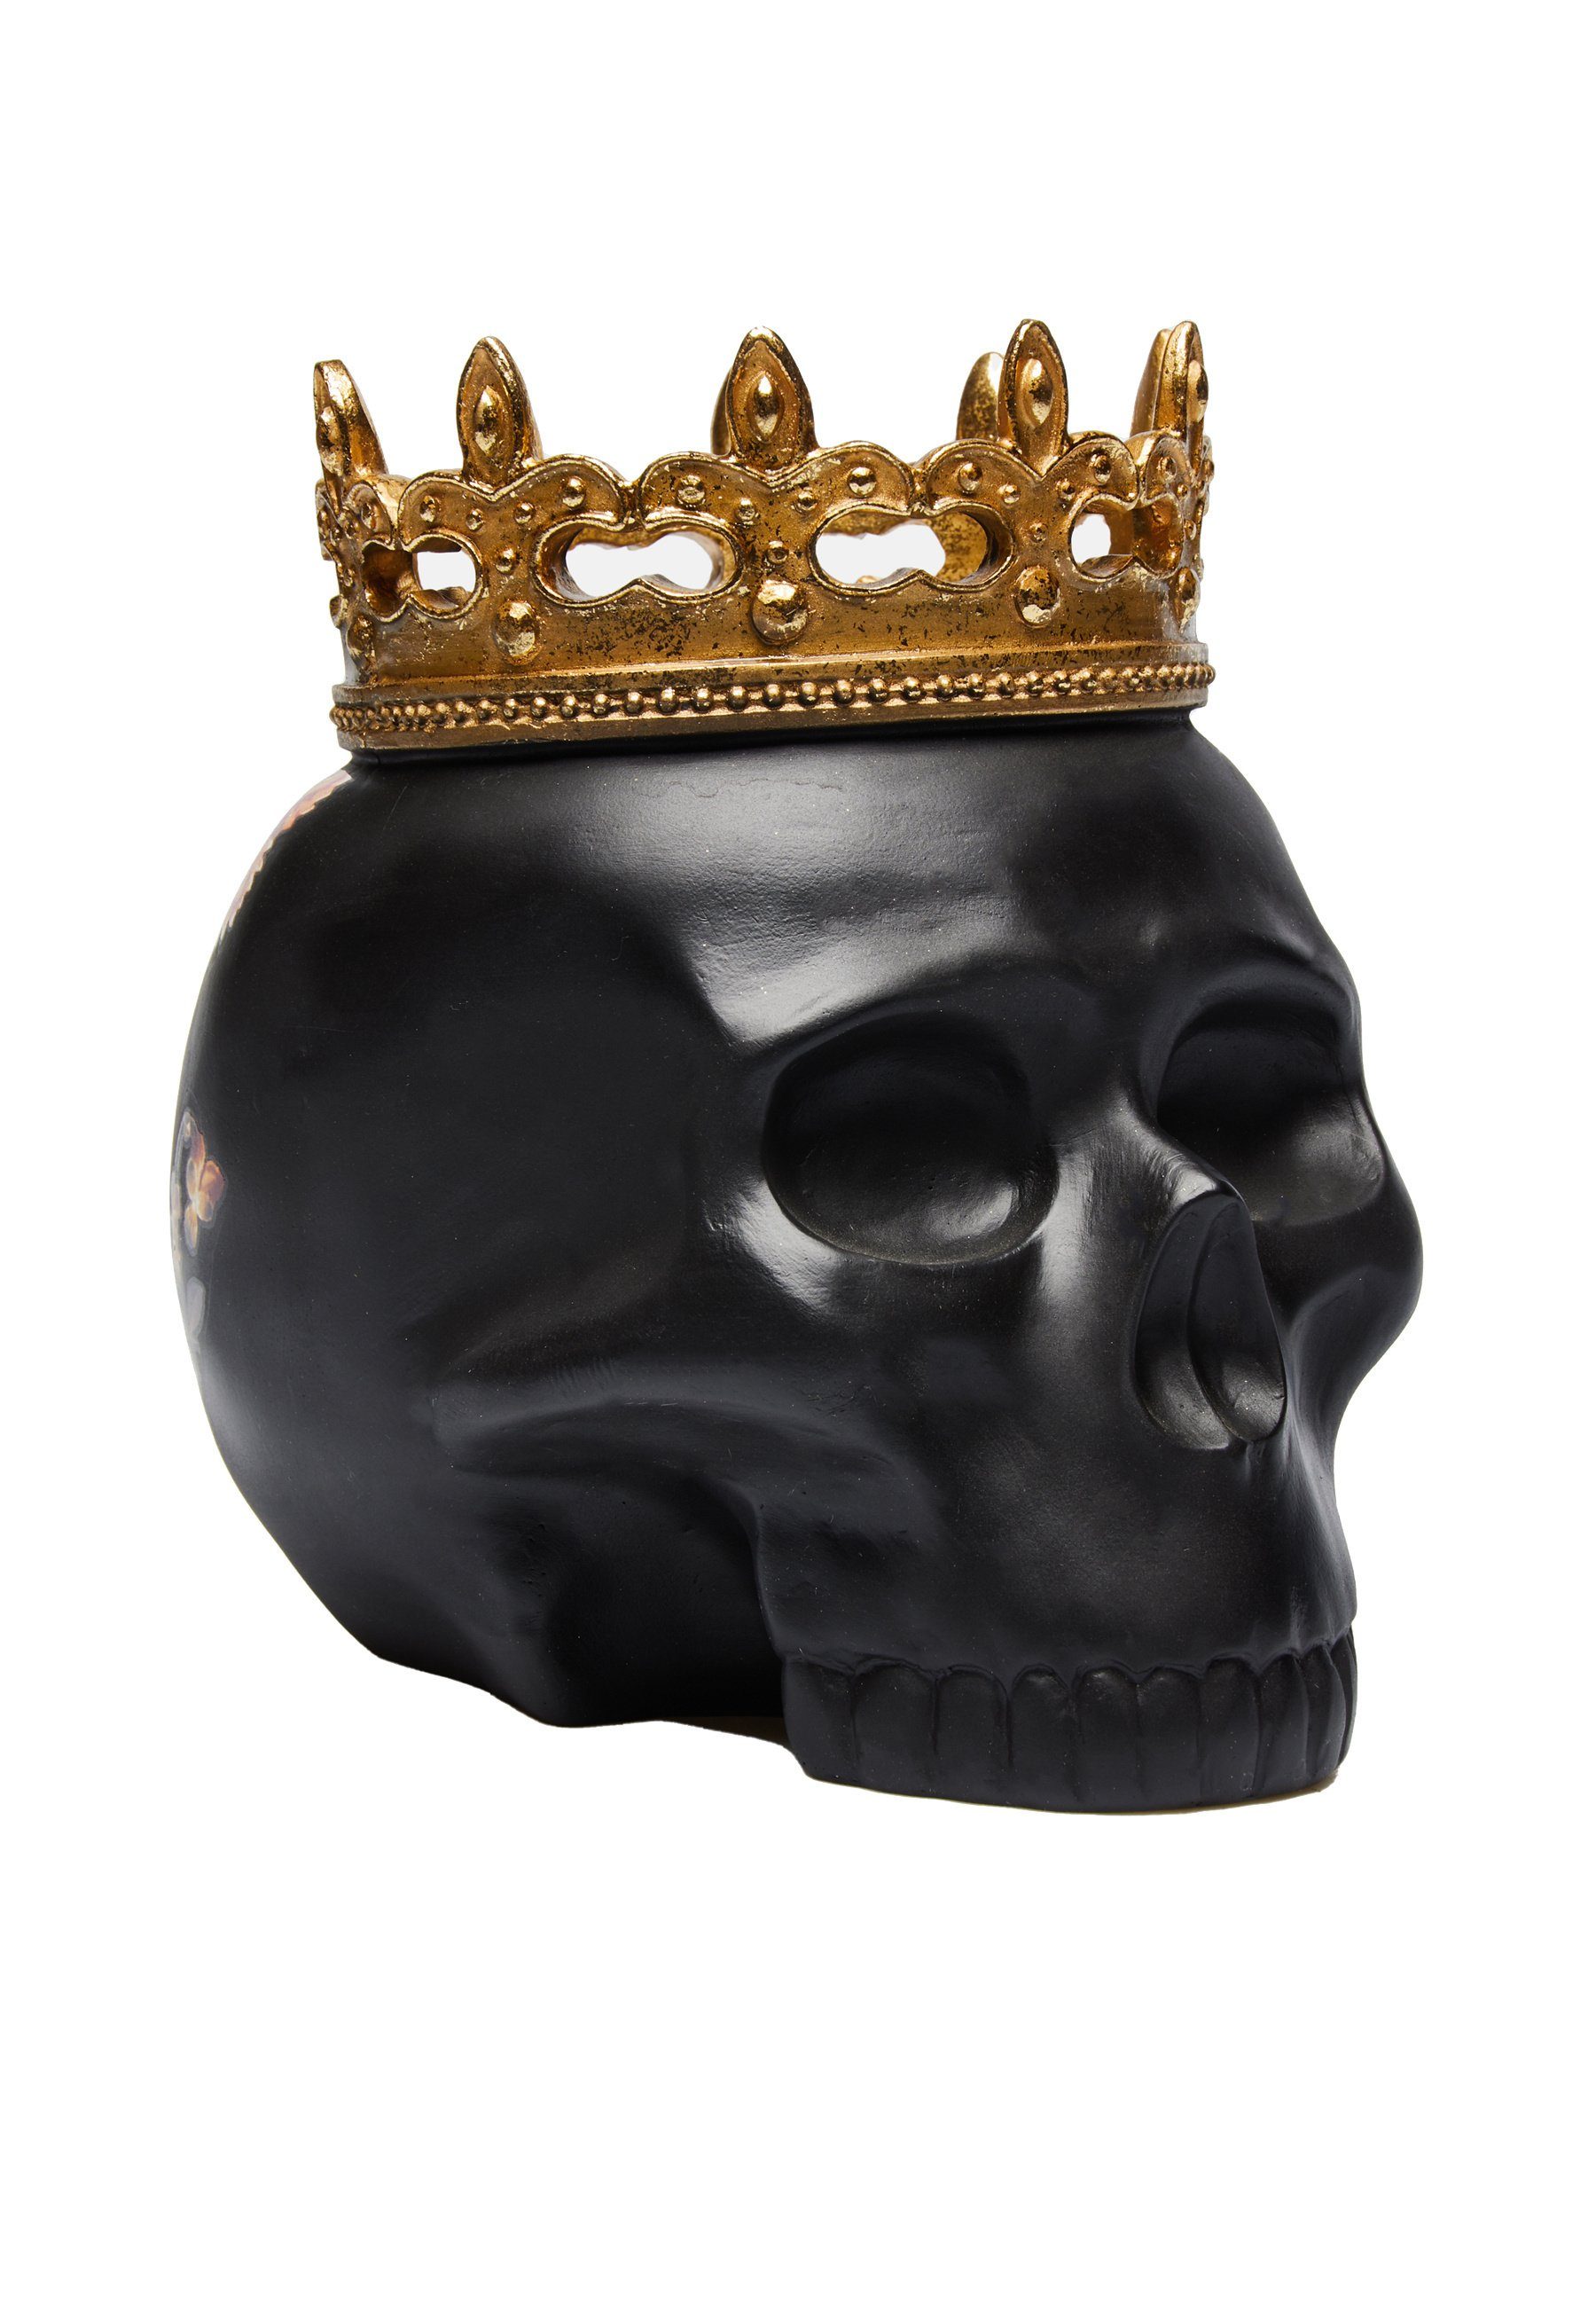 KARE Deko-Objekt King Skull